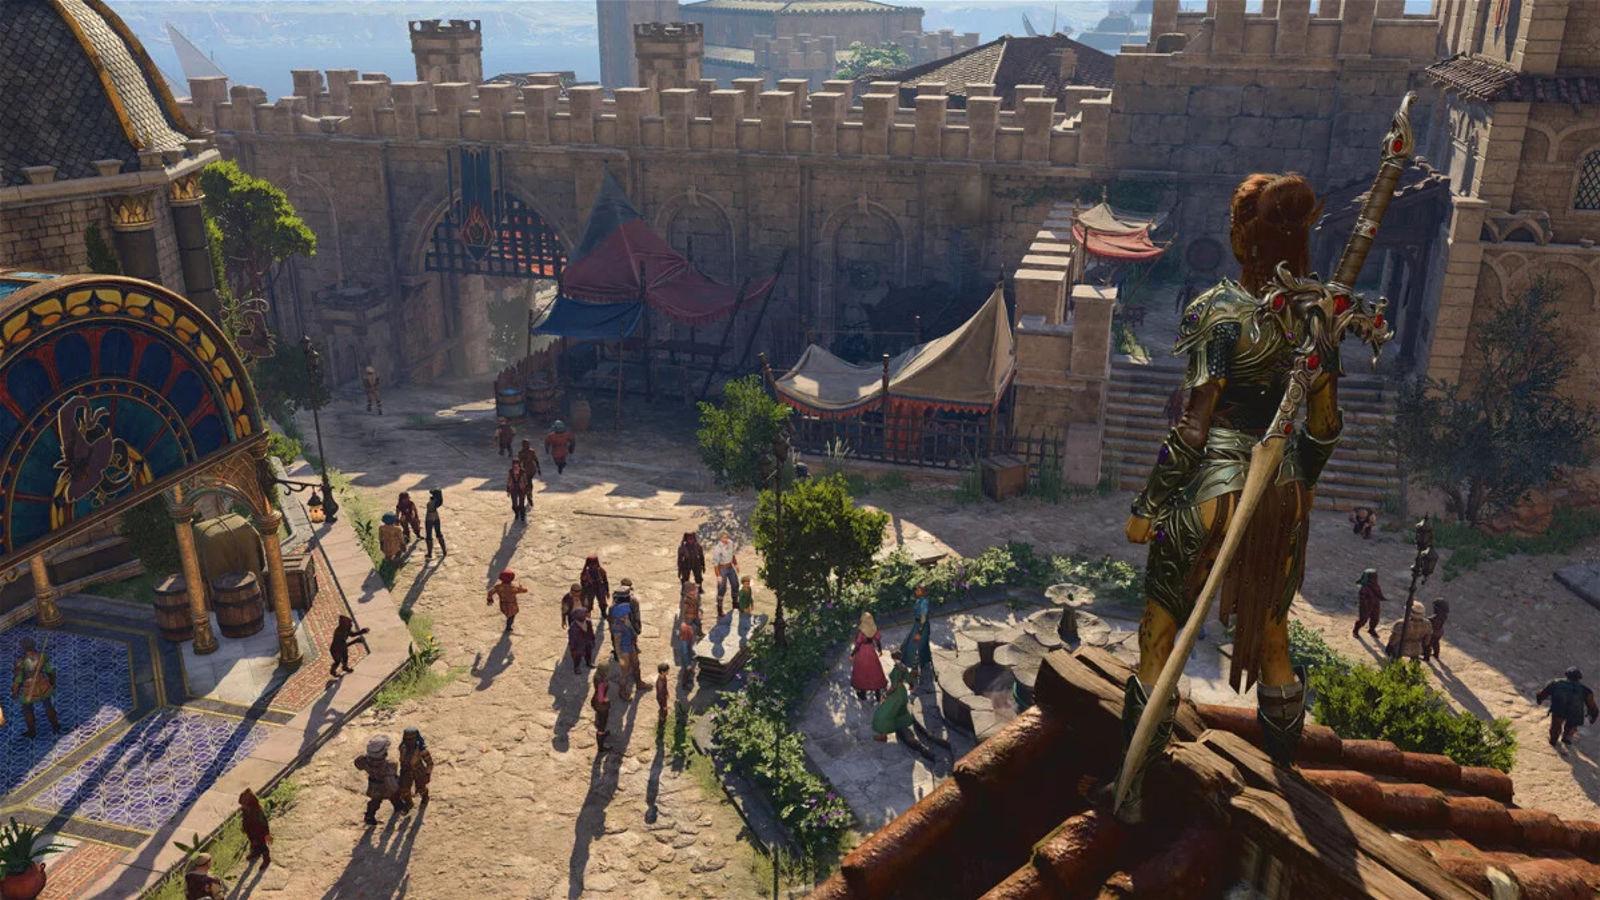 Lae'zel overlooks a settlement in Baldur's Gate 3